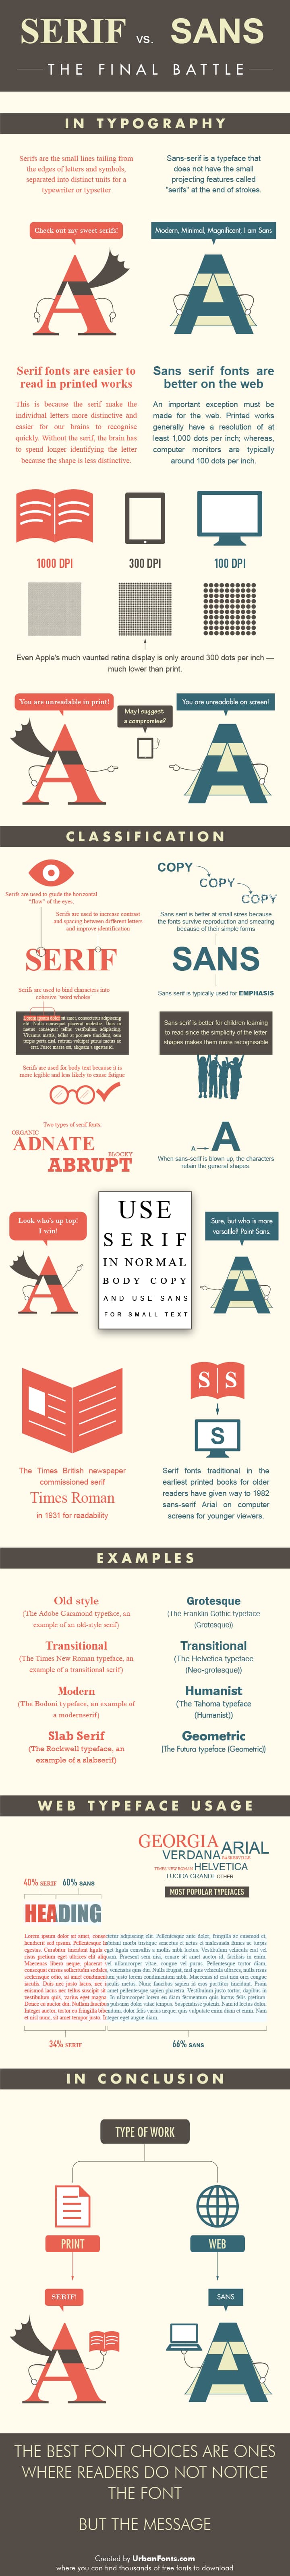 Serif vs Sans-Serif fonts